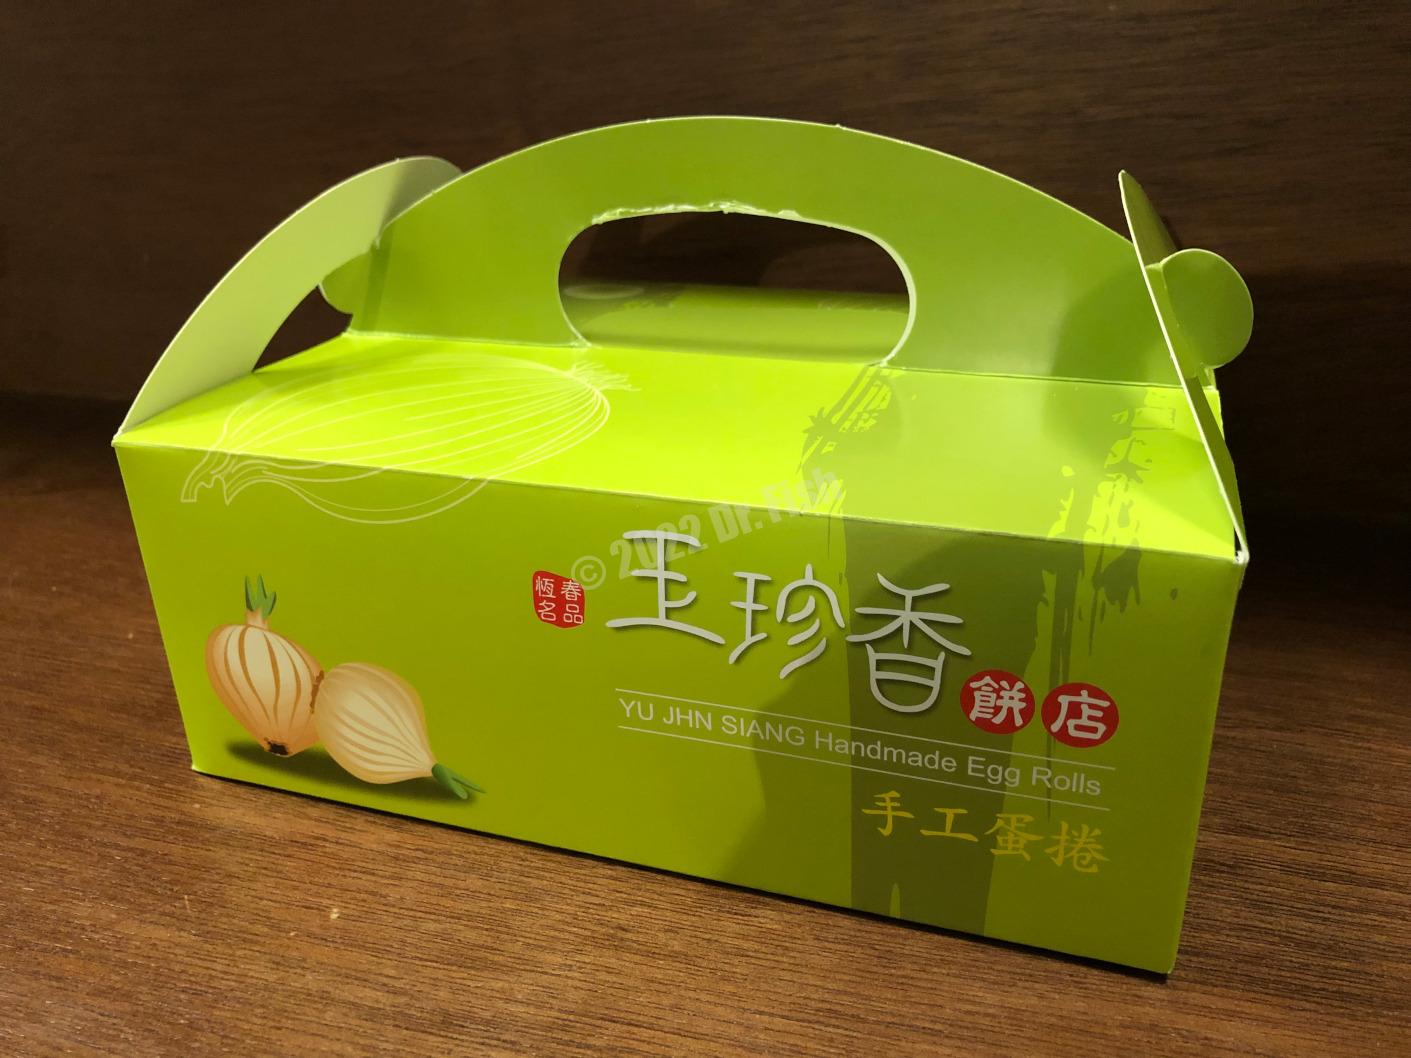 egg roll box of yujhn siang